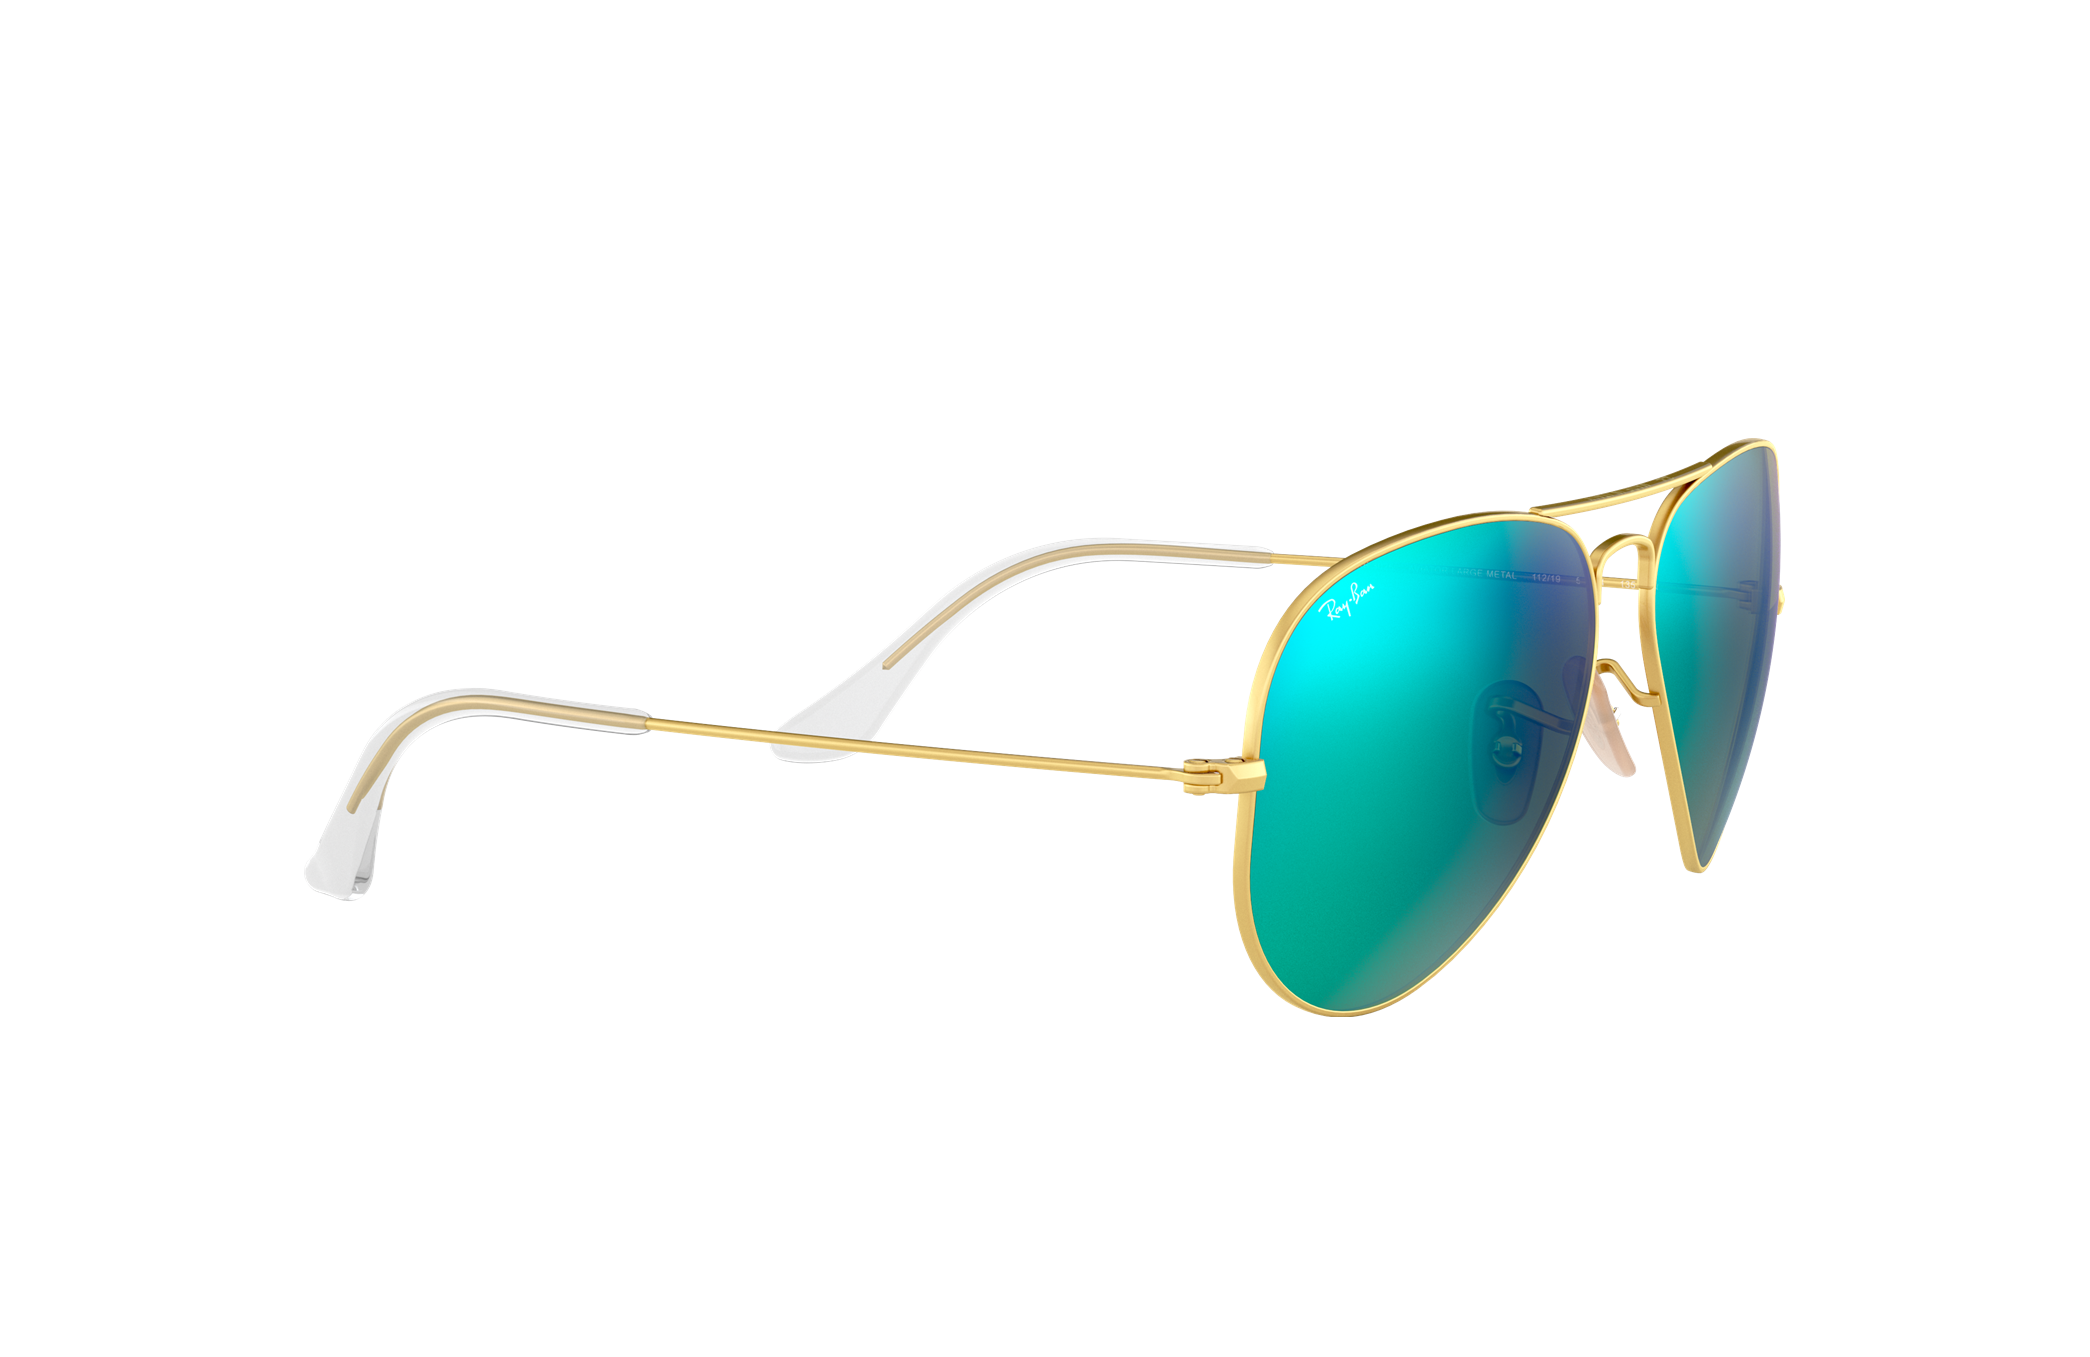 Large Big SKY Blue Mirror Gold Frame Aviator Rock Fashion Sunglasses Glasses 